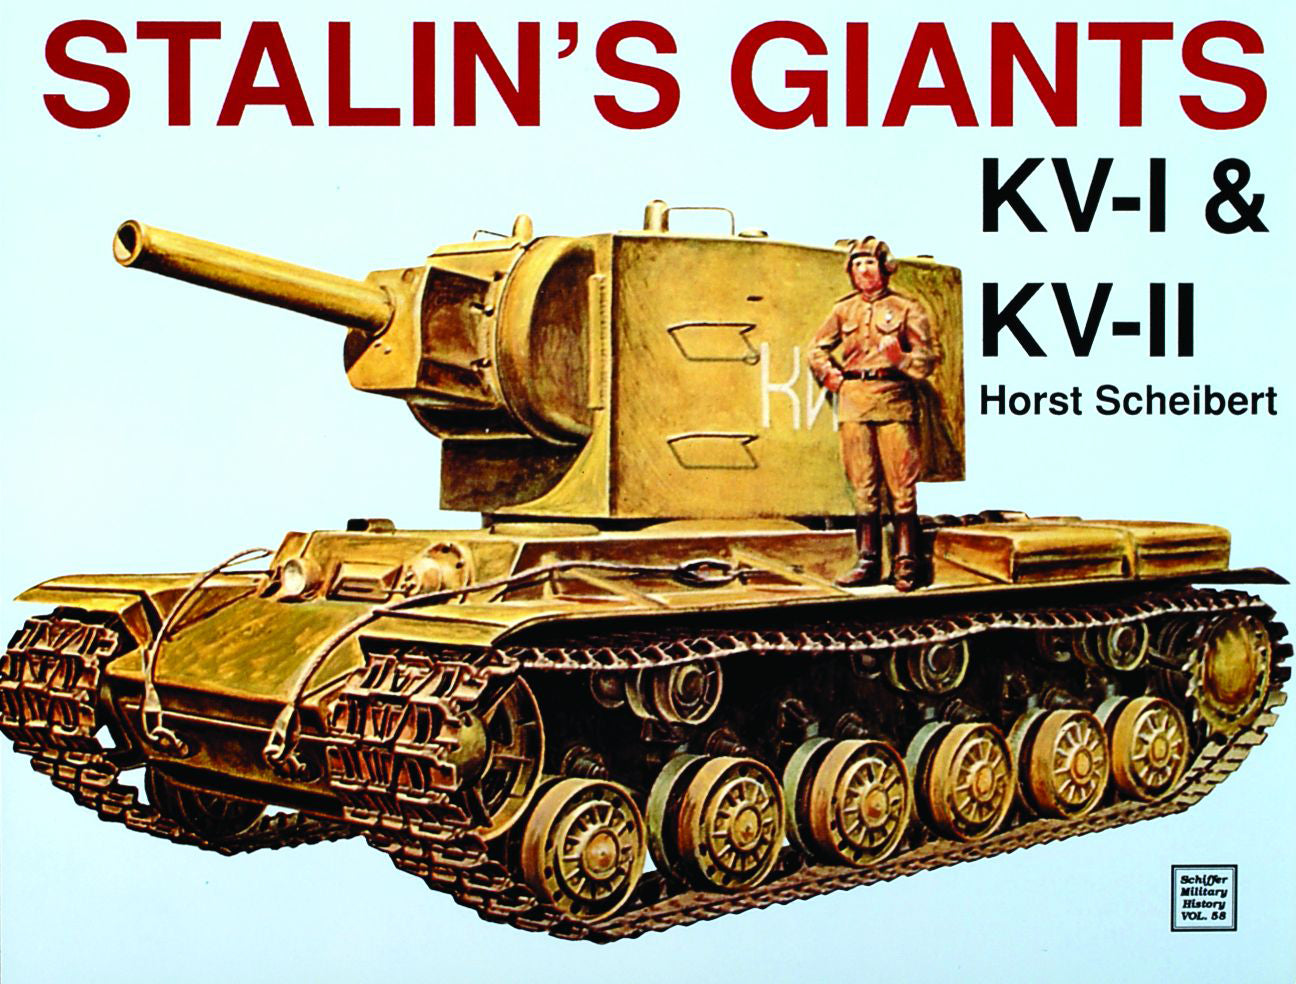 Stalin's Giants Kv-I & Kv-II